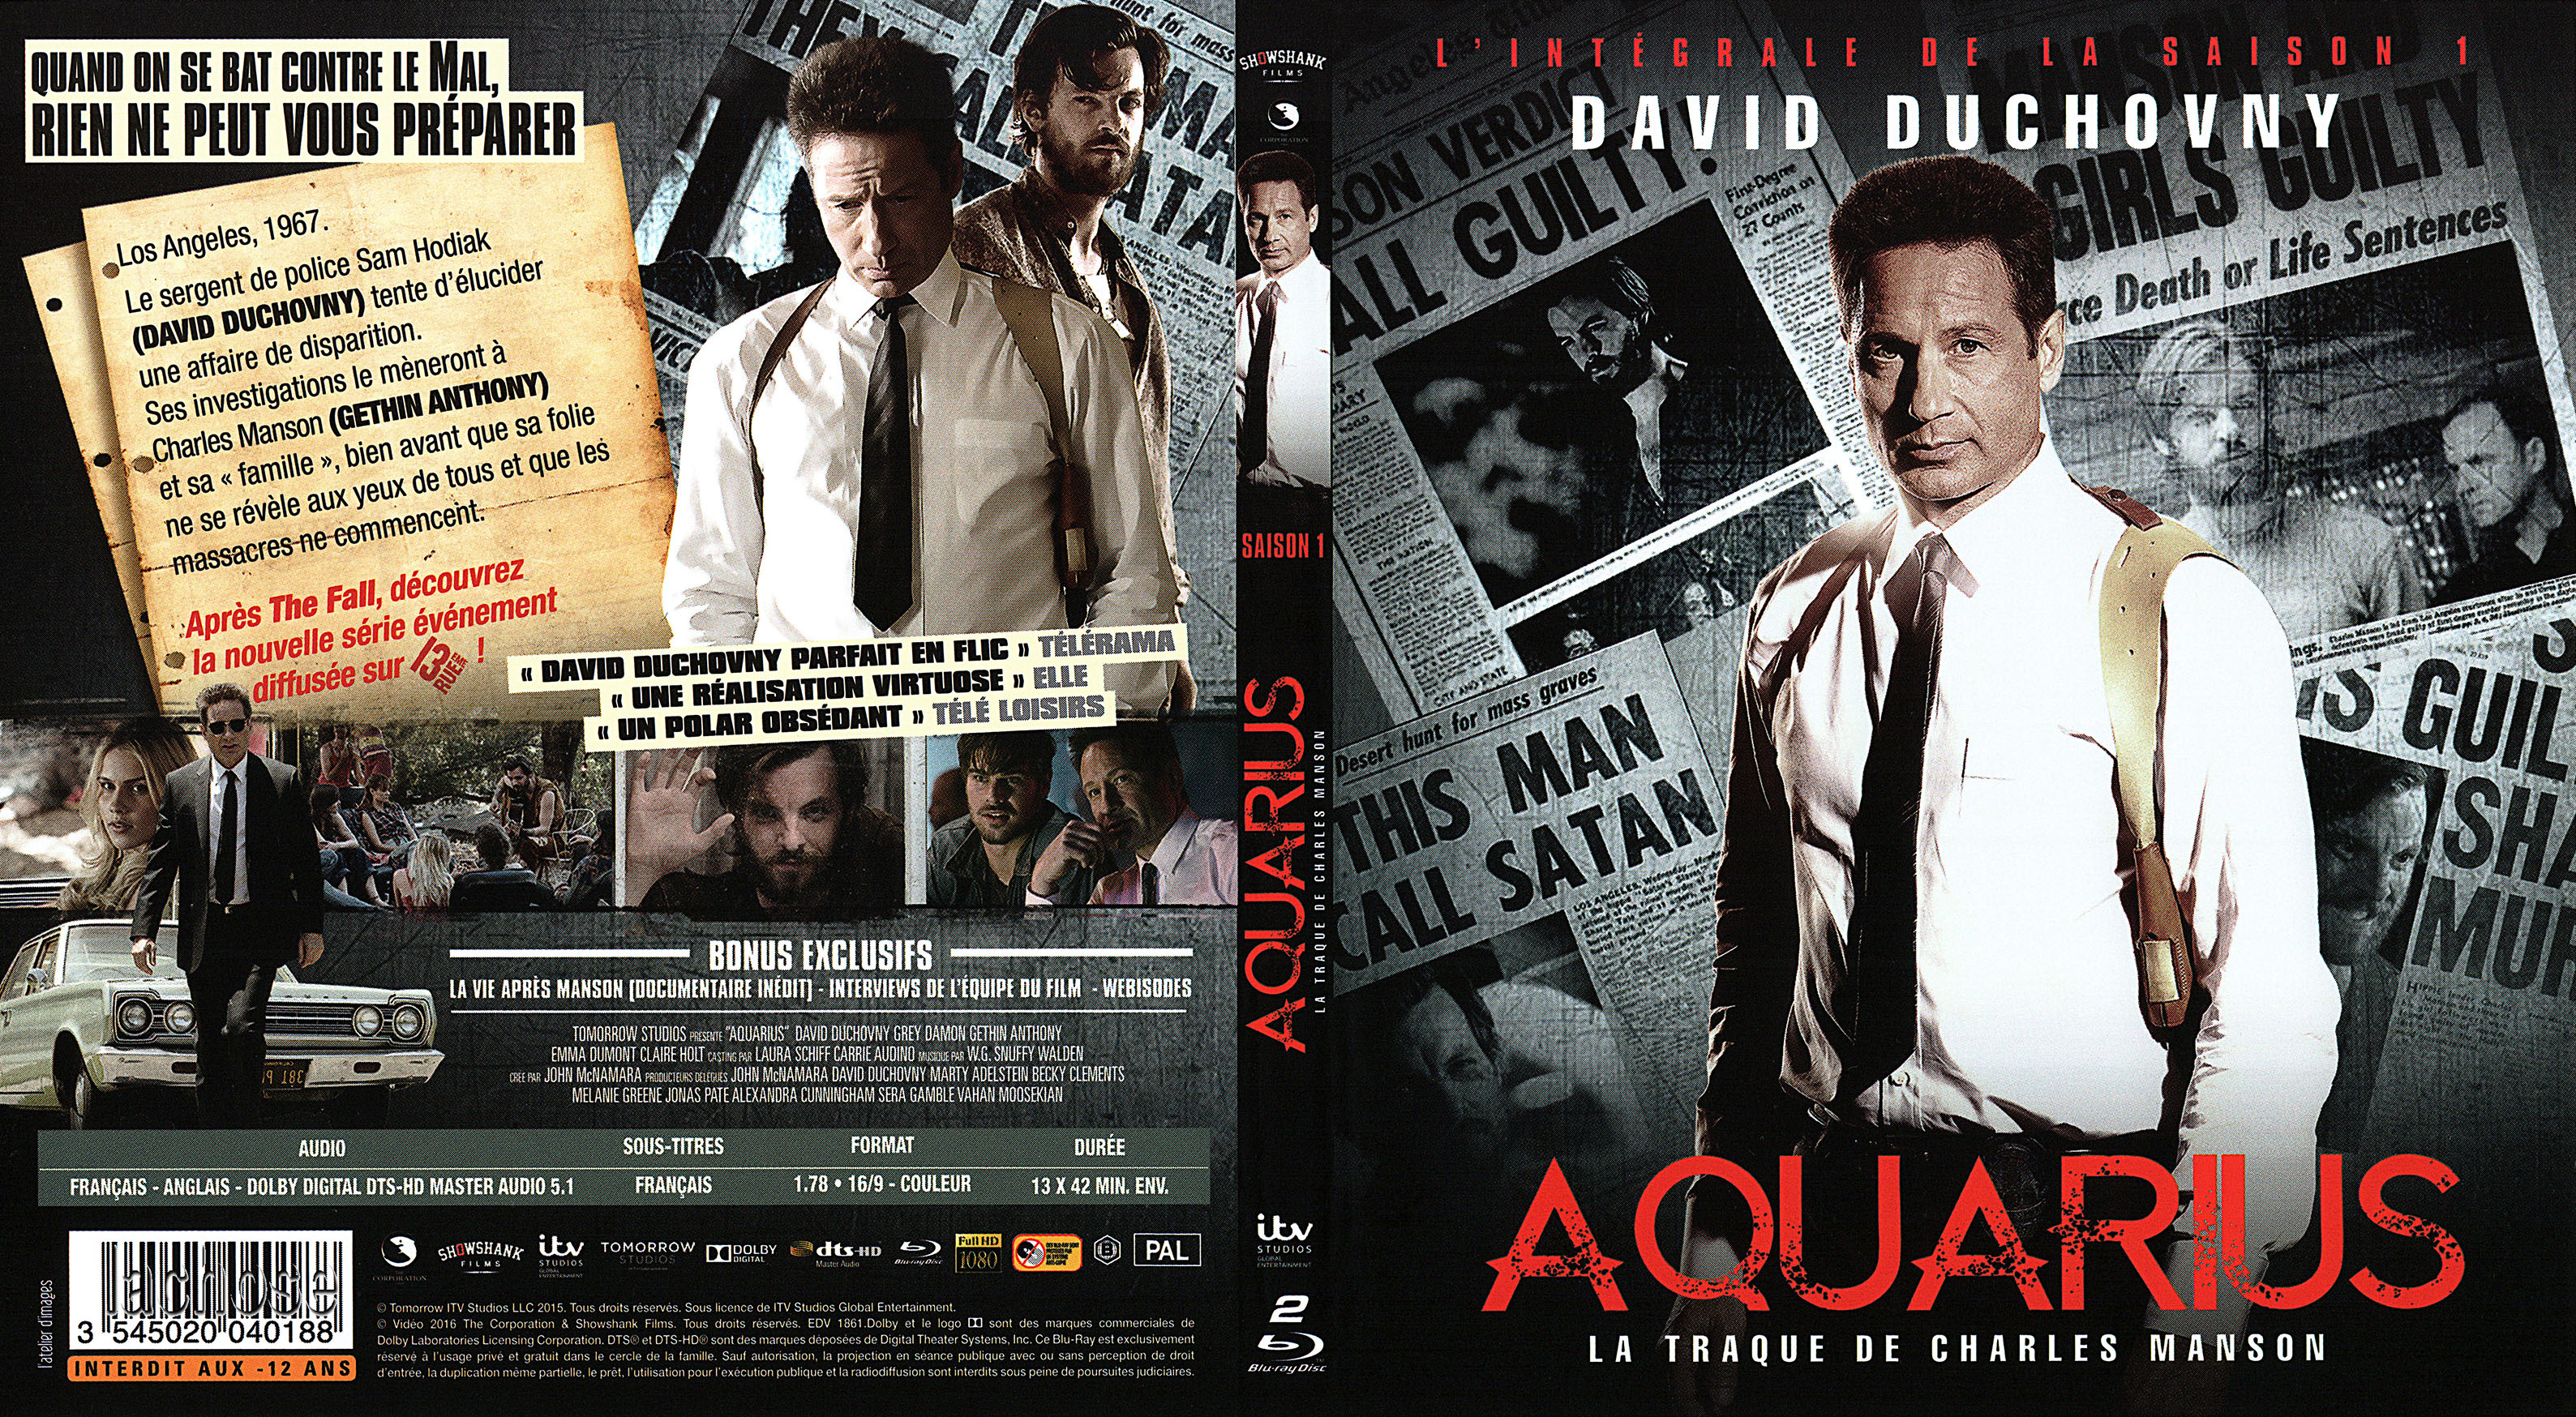 Jaquette DVD Aquarius Saison 1 (BLU-RAY)